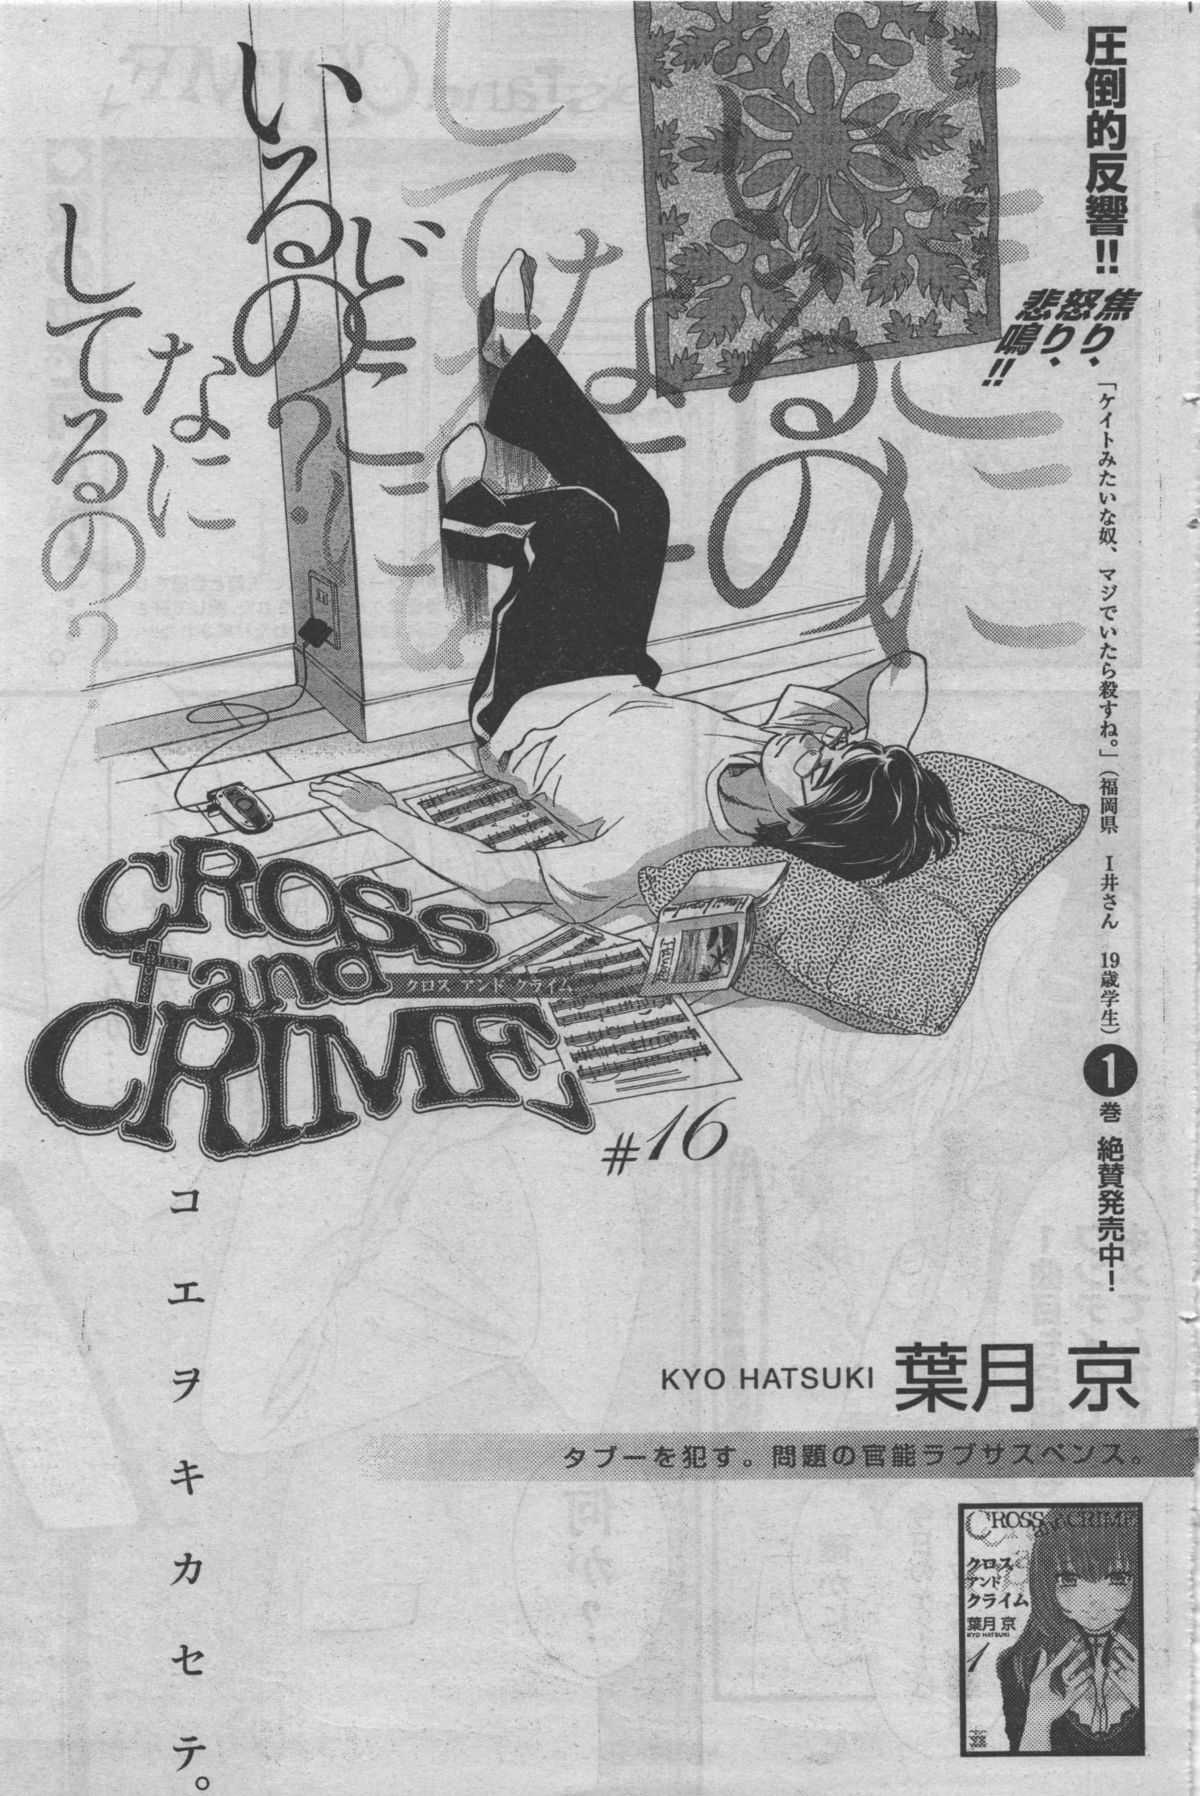 [Hatsuki Kyo] Cross and Crime Ch 14-18, 20-21 [JPN] クロス アンド クライム